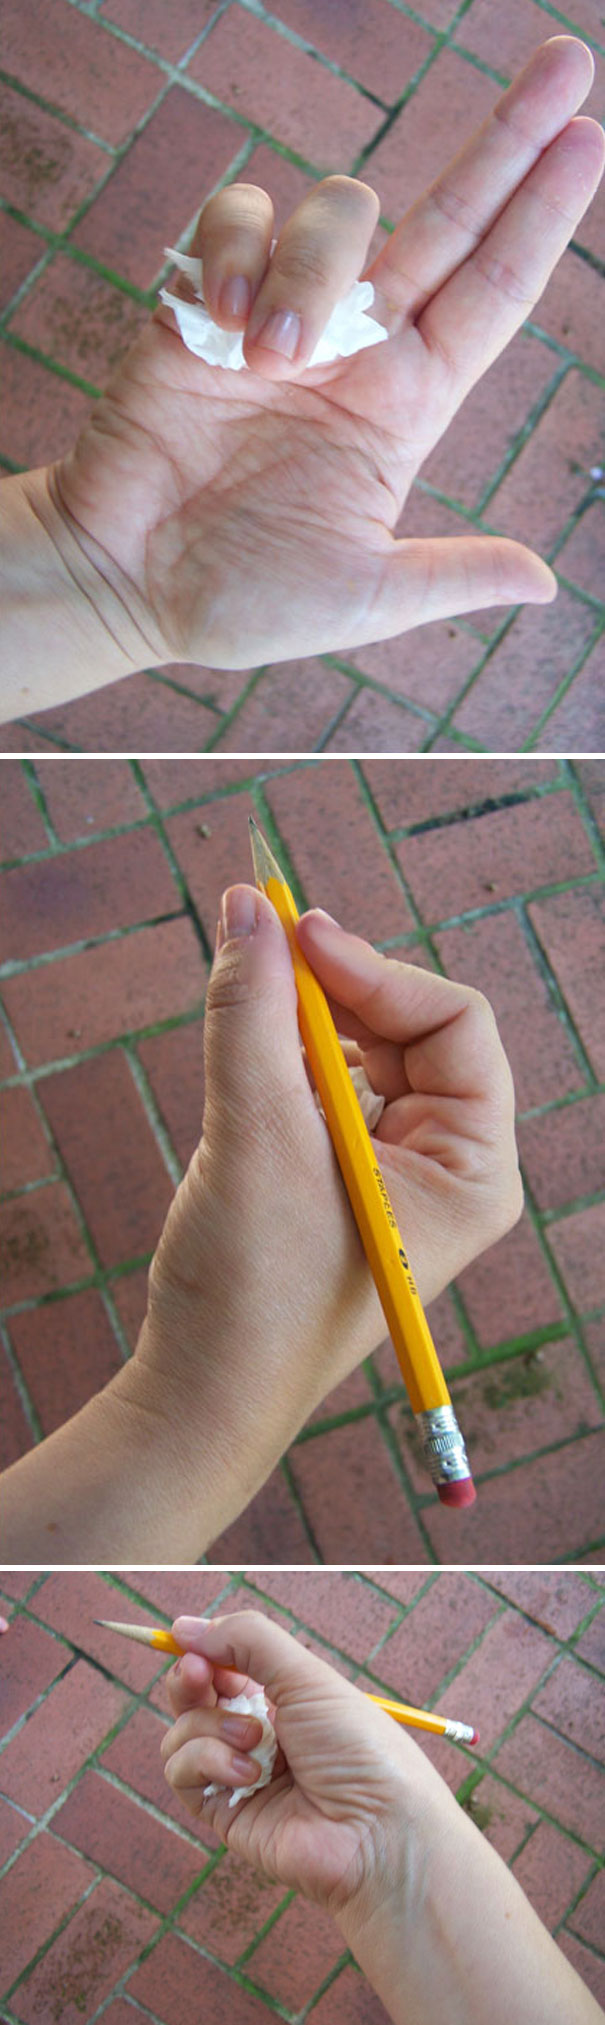 Teach A Child To Hold A Pencil Using A Kleenex